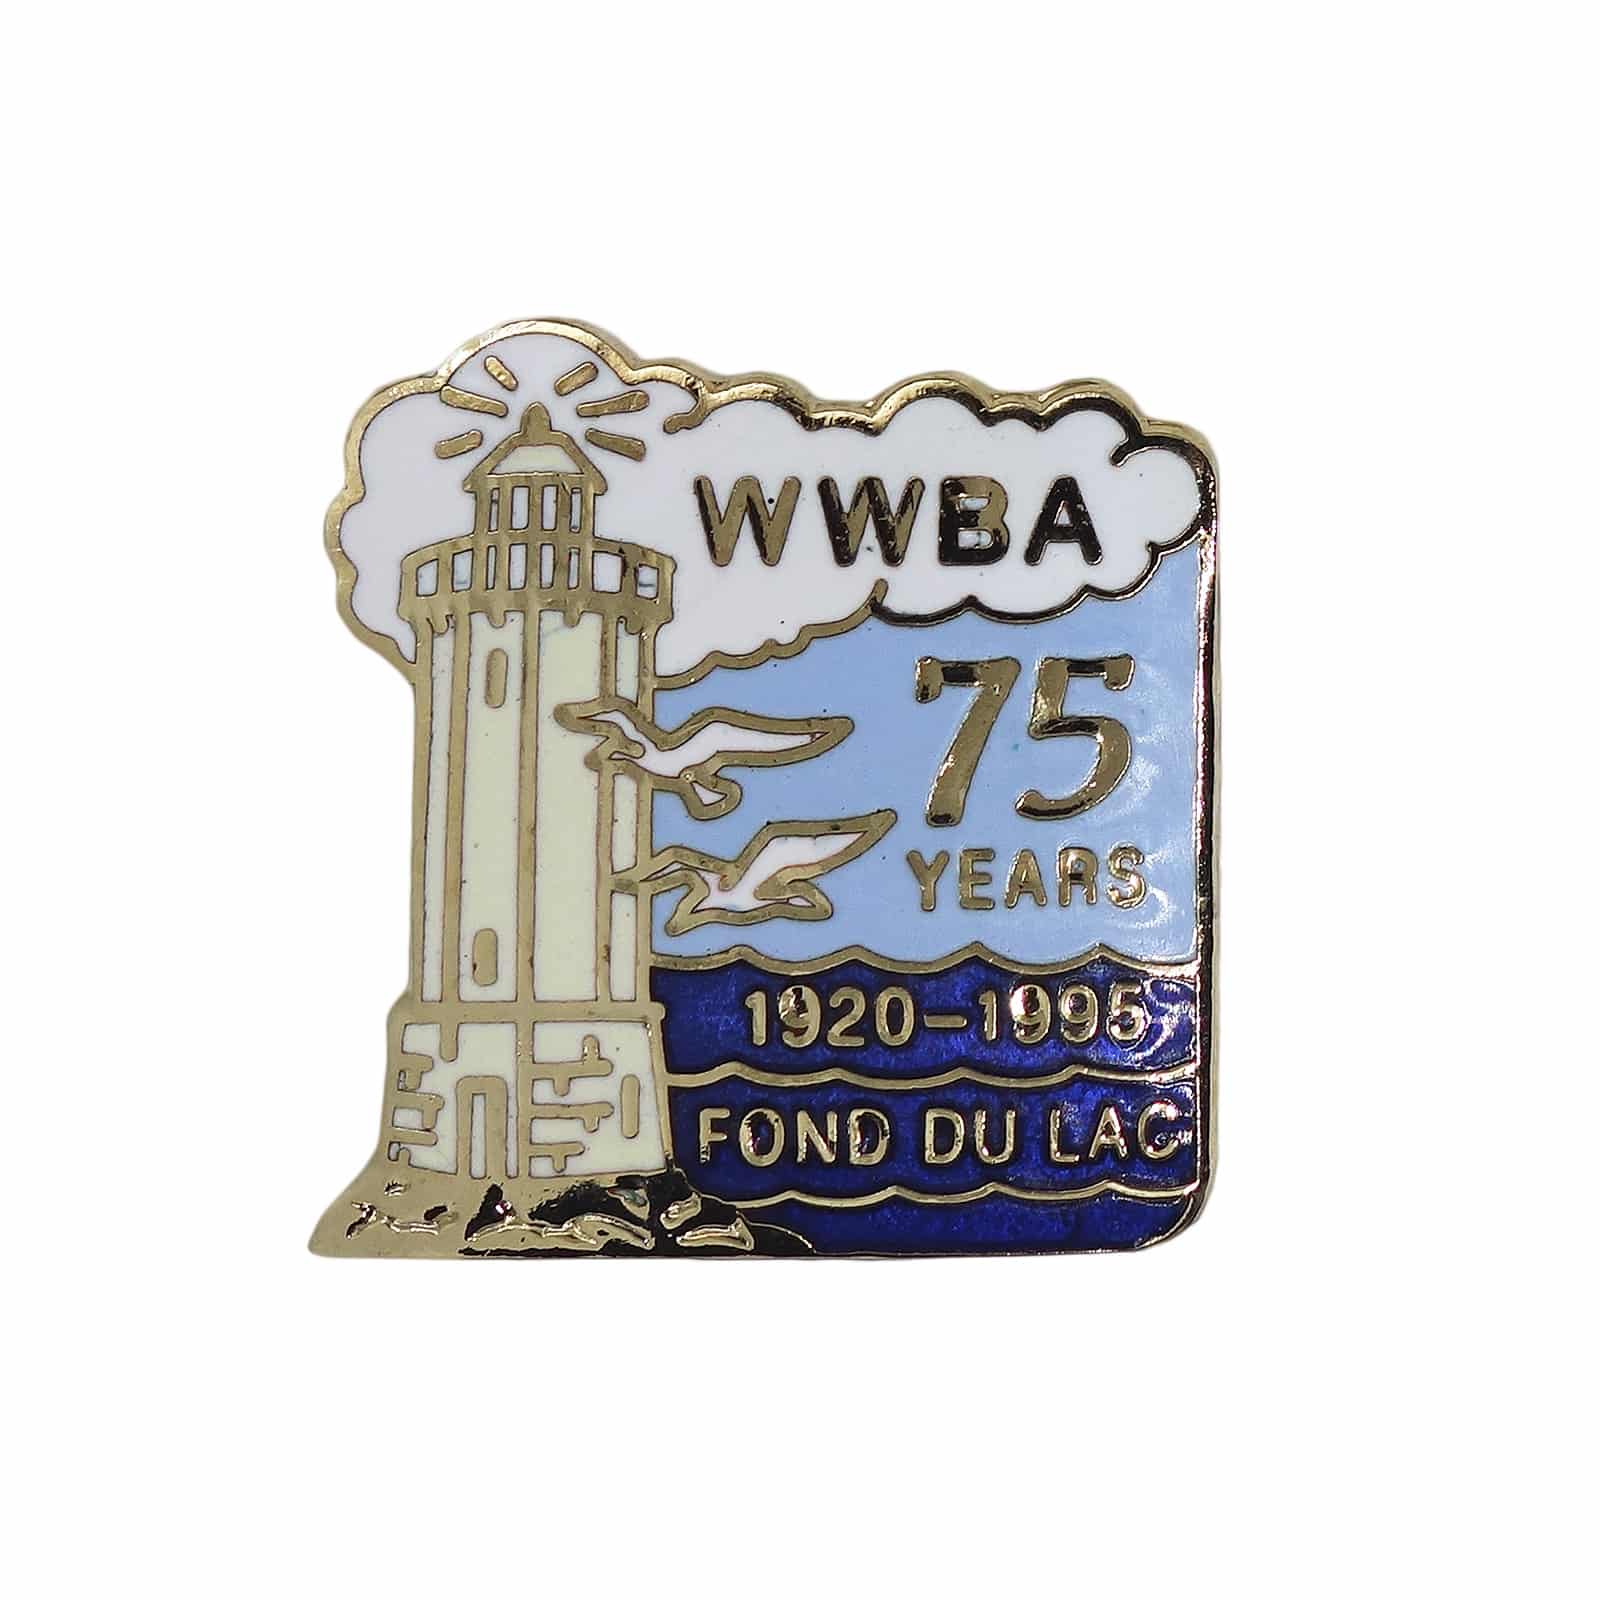 WWBA ボウリング ピンズ 75 YEARS 灯台 FOND DU LAC 留め具付き